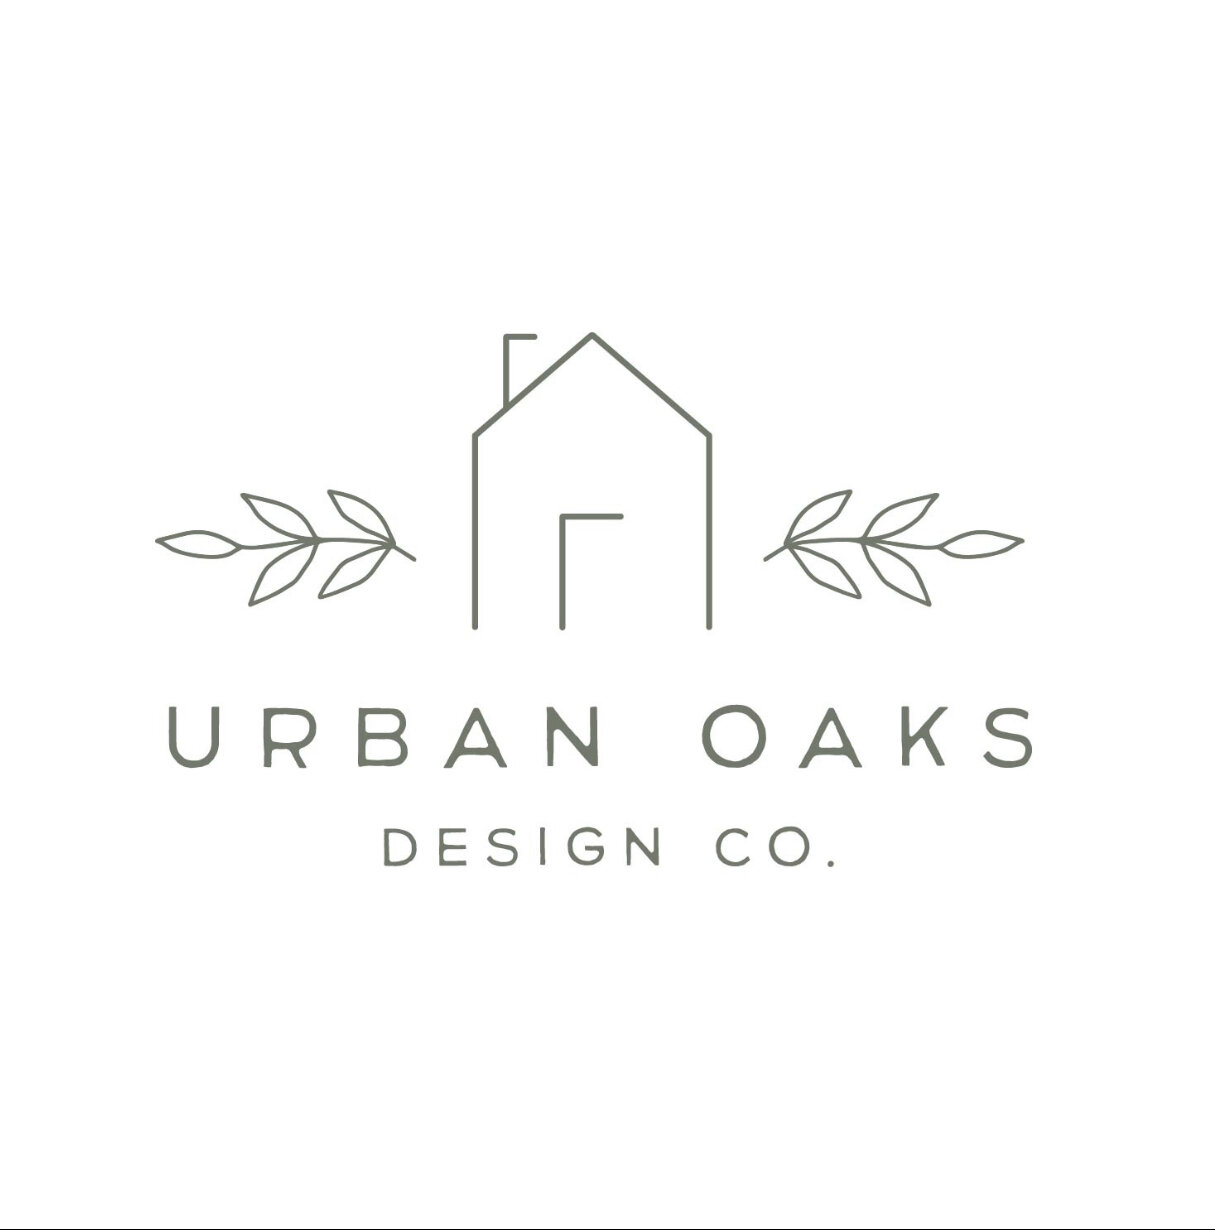 Urban Oaks Design Co